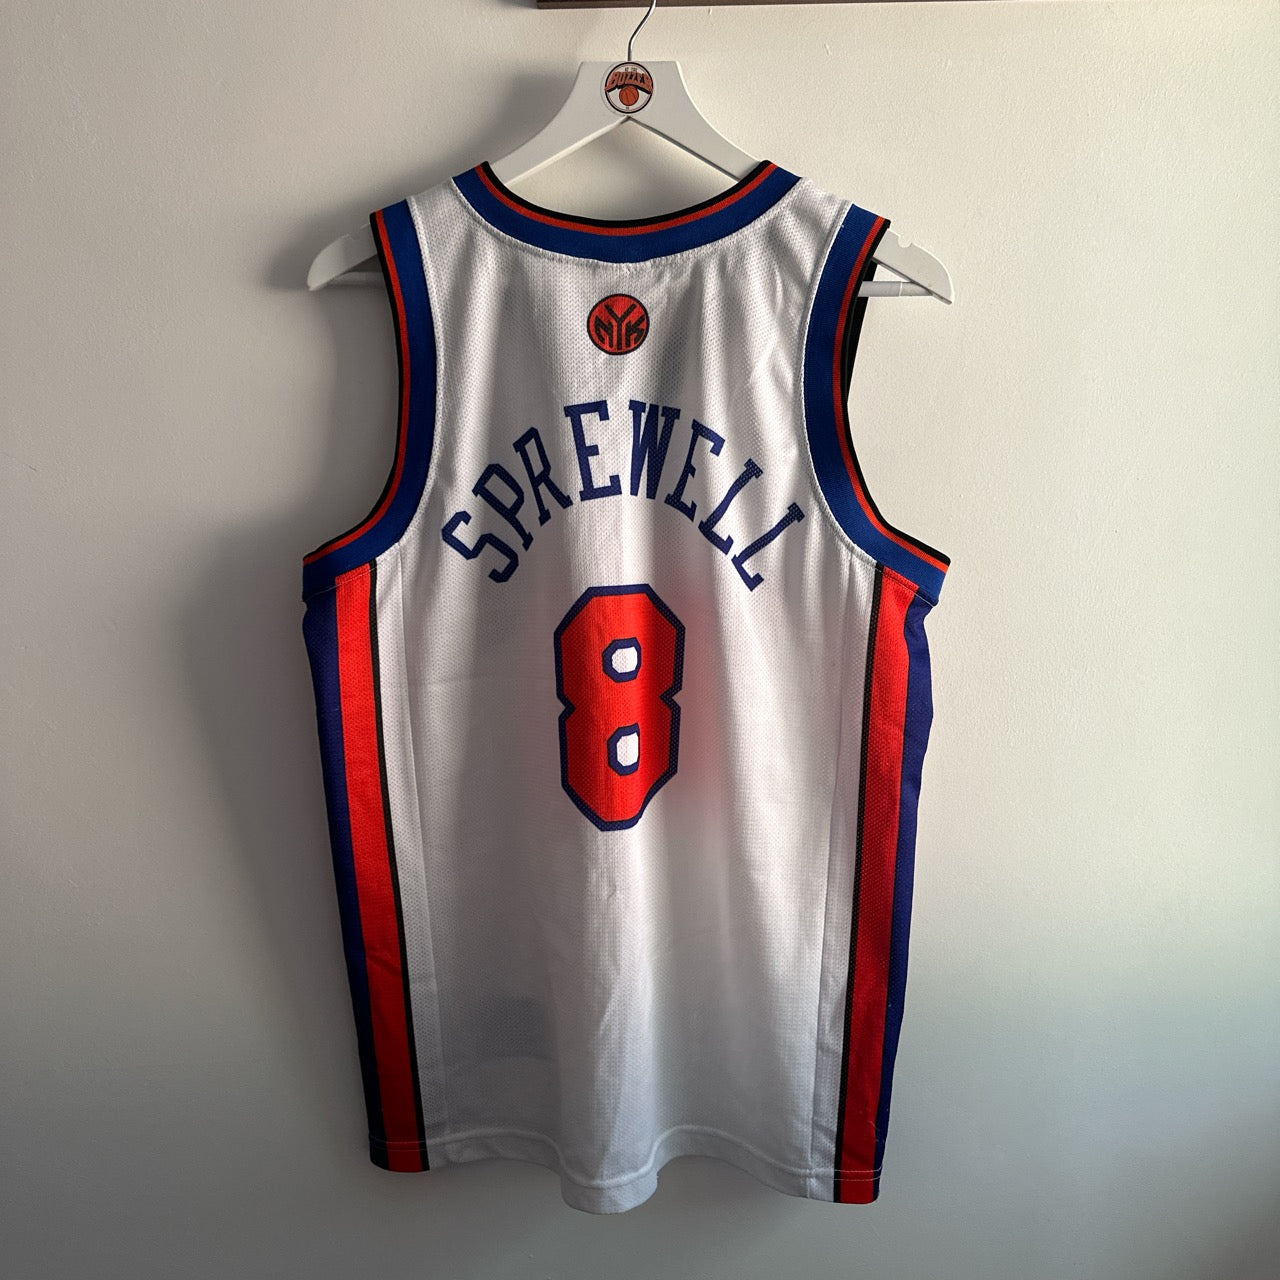 New York Knicks Latrell Sprewell jersey - Champion (Small) - At the buzzer UK